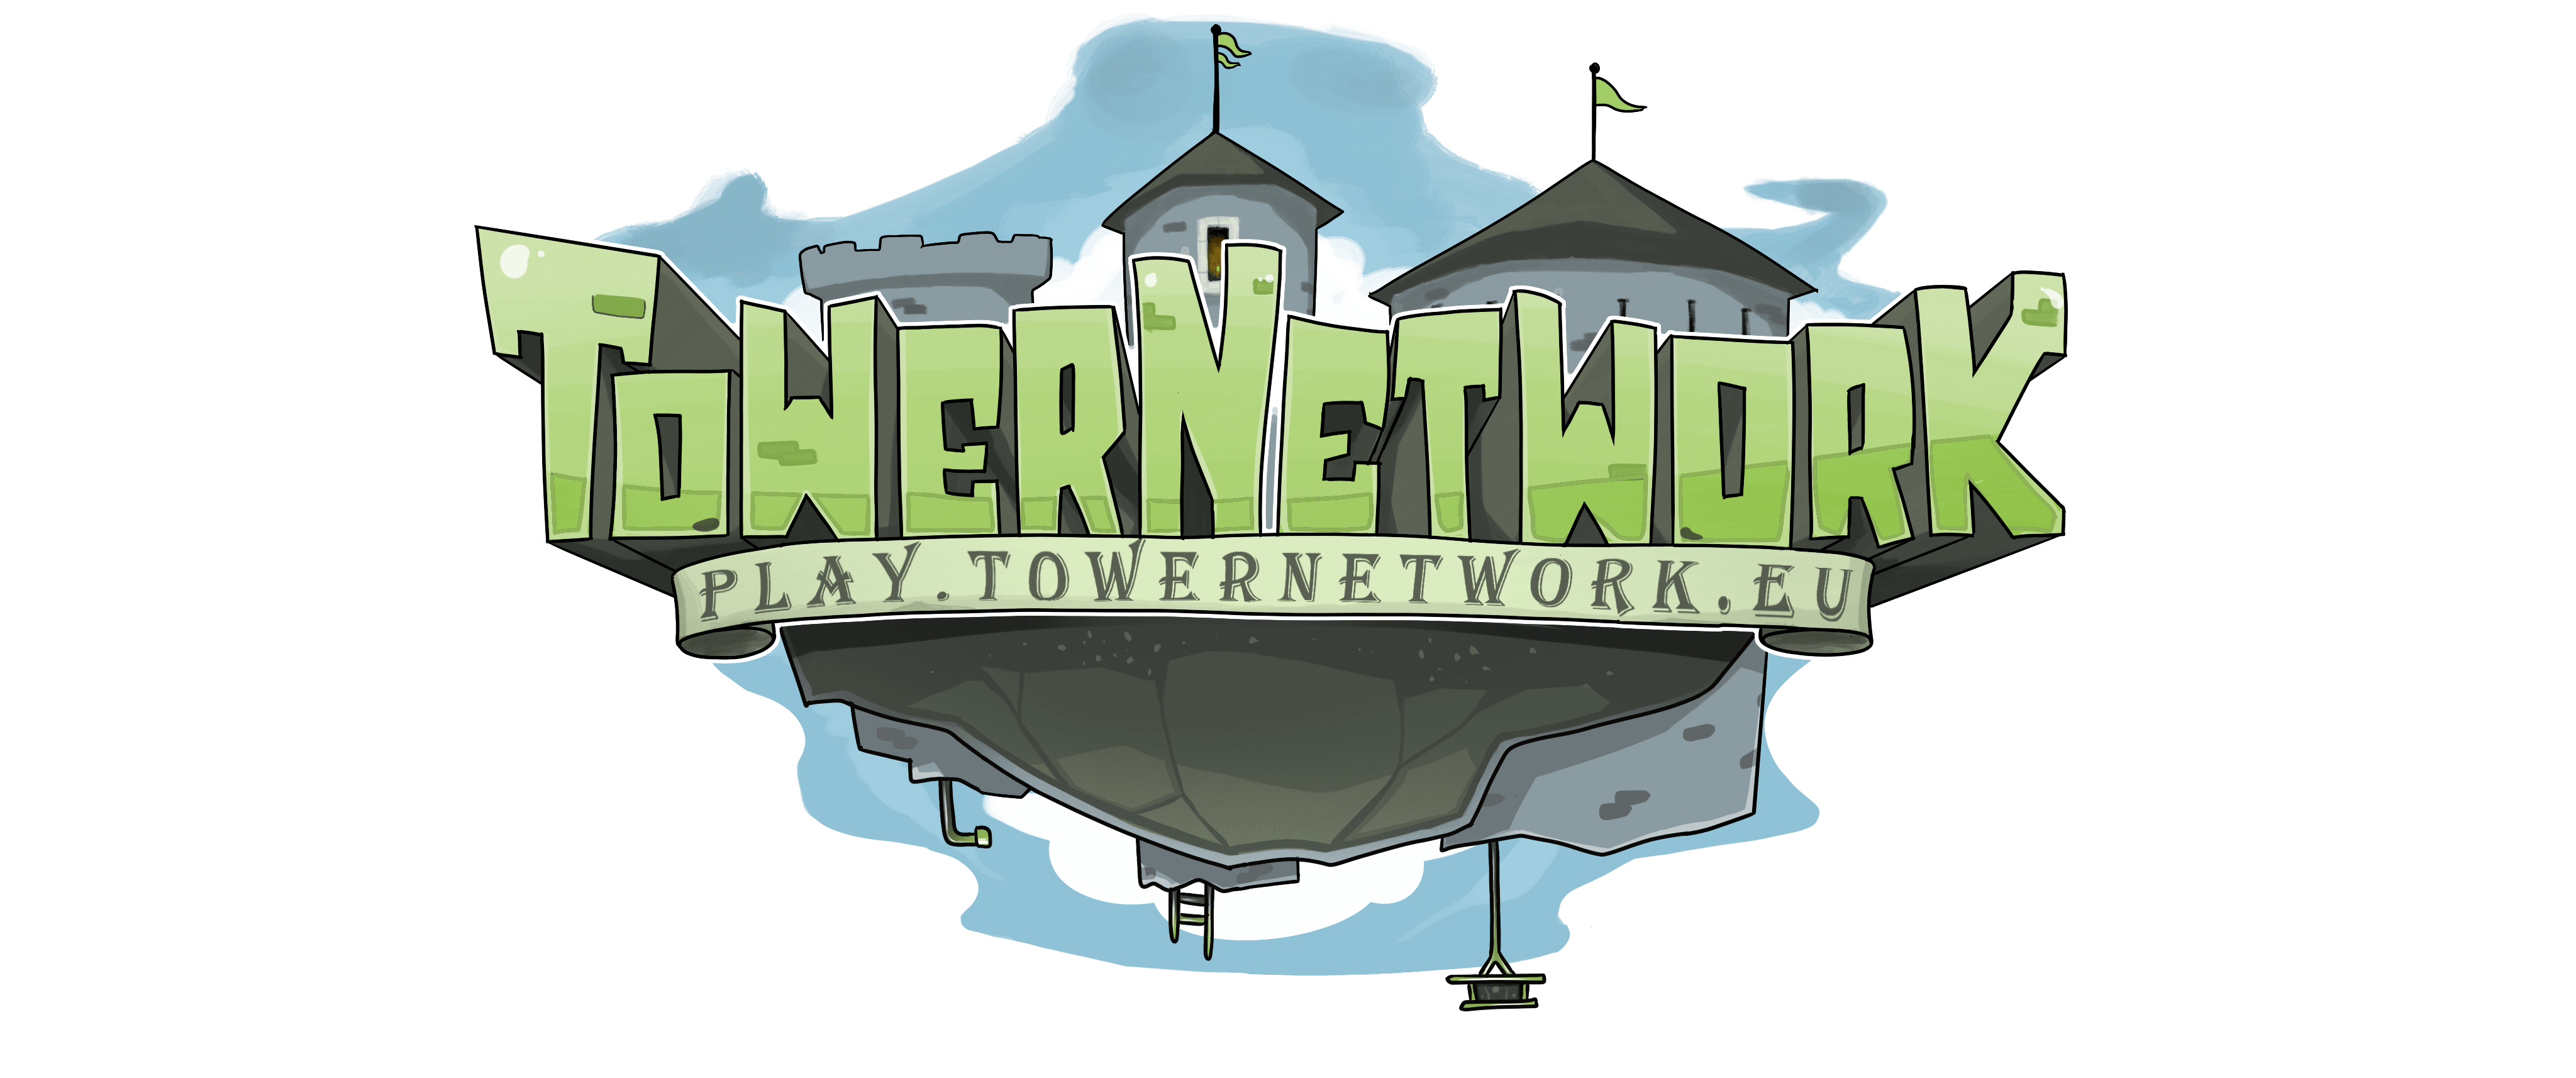 TowerNetwork logo